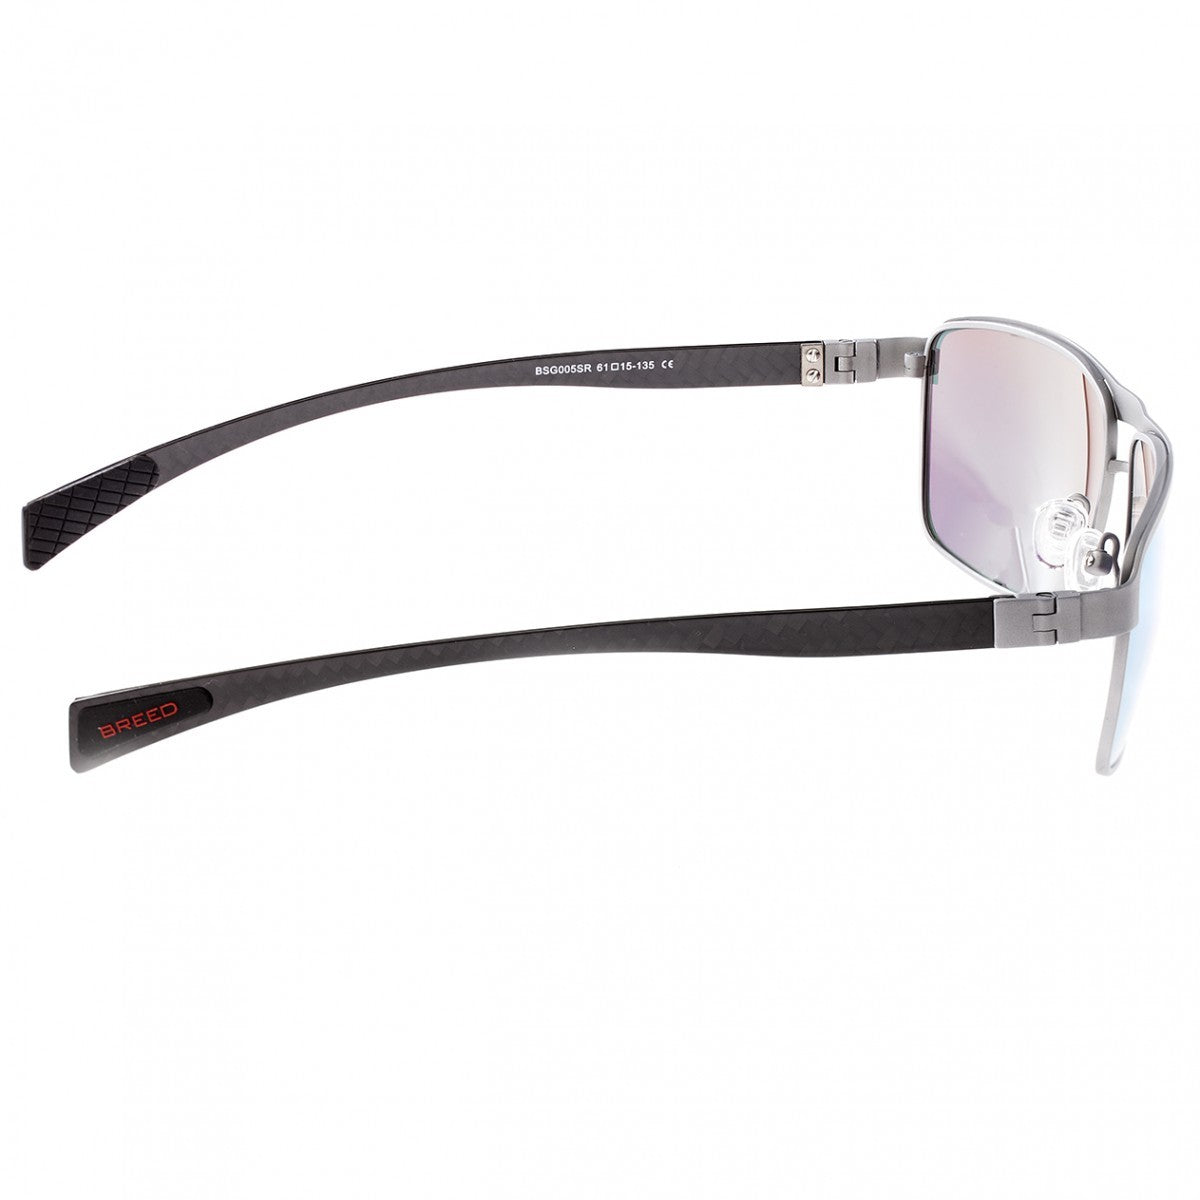 Breed Taurus Titanium and Carbon Fiber Polarized Sunglasses - Silver/Gold - BSG005SR